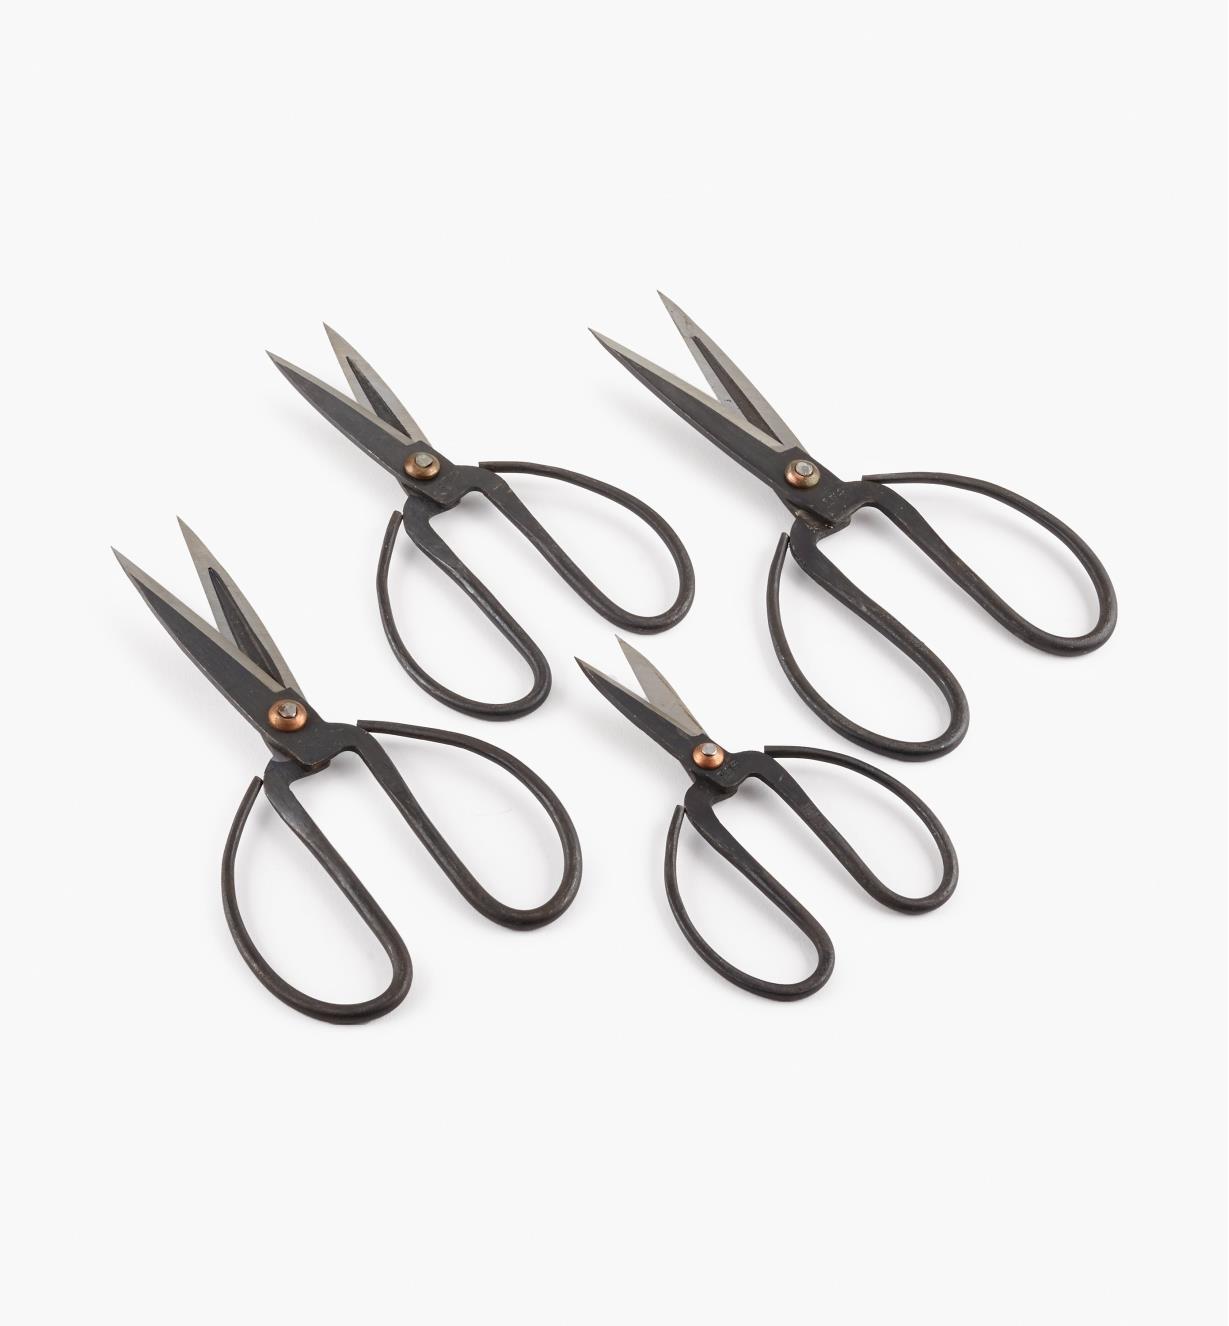 45K1010 - Chinese Scissors, set of 4